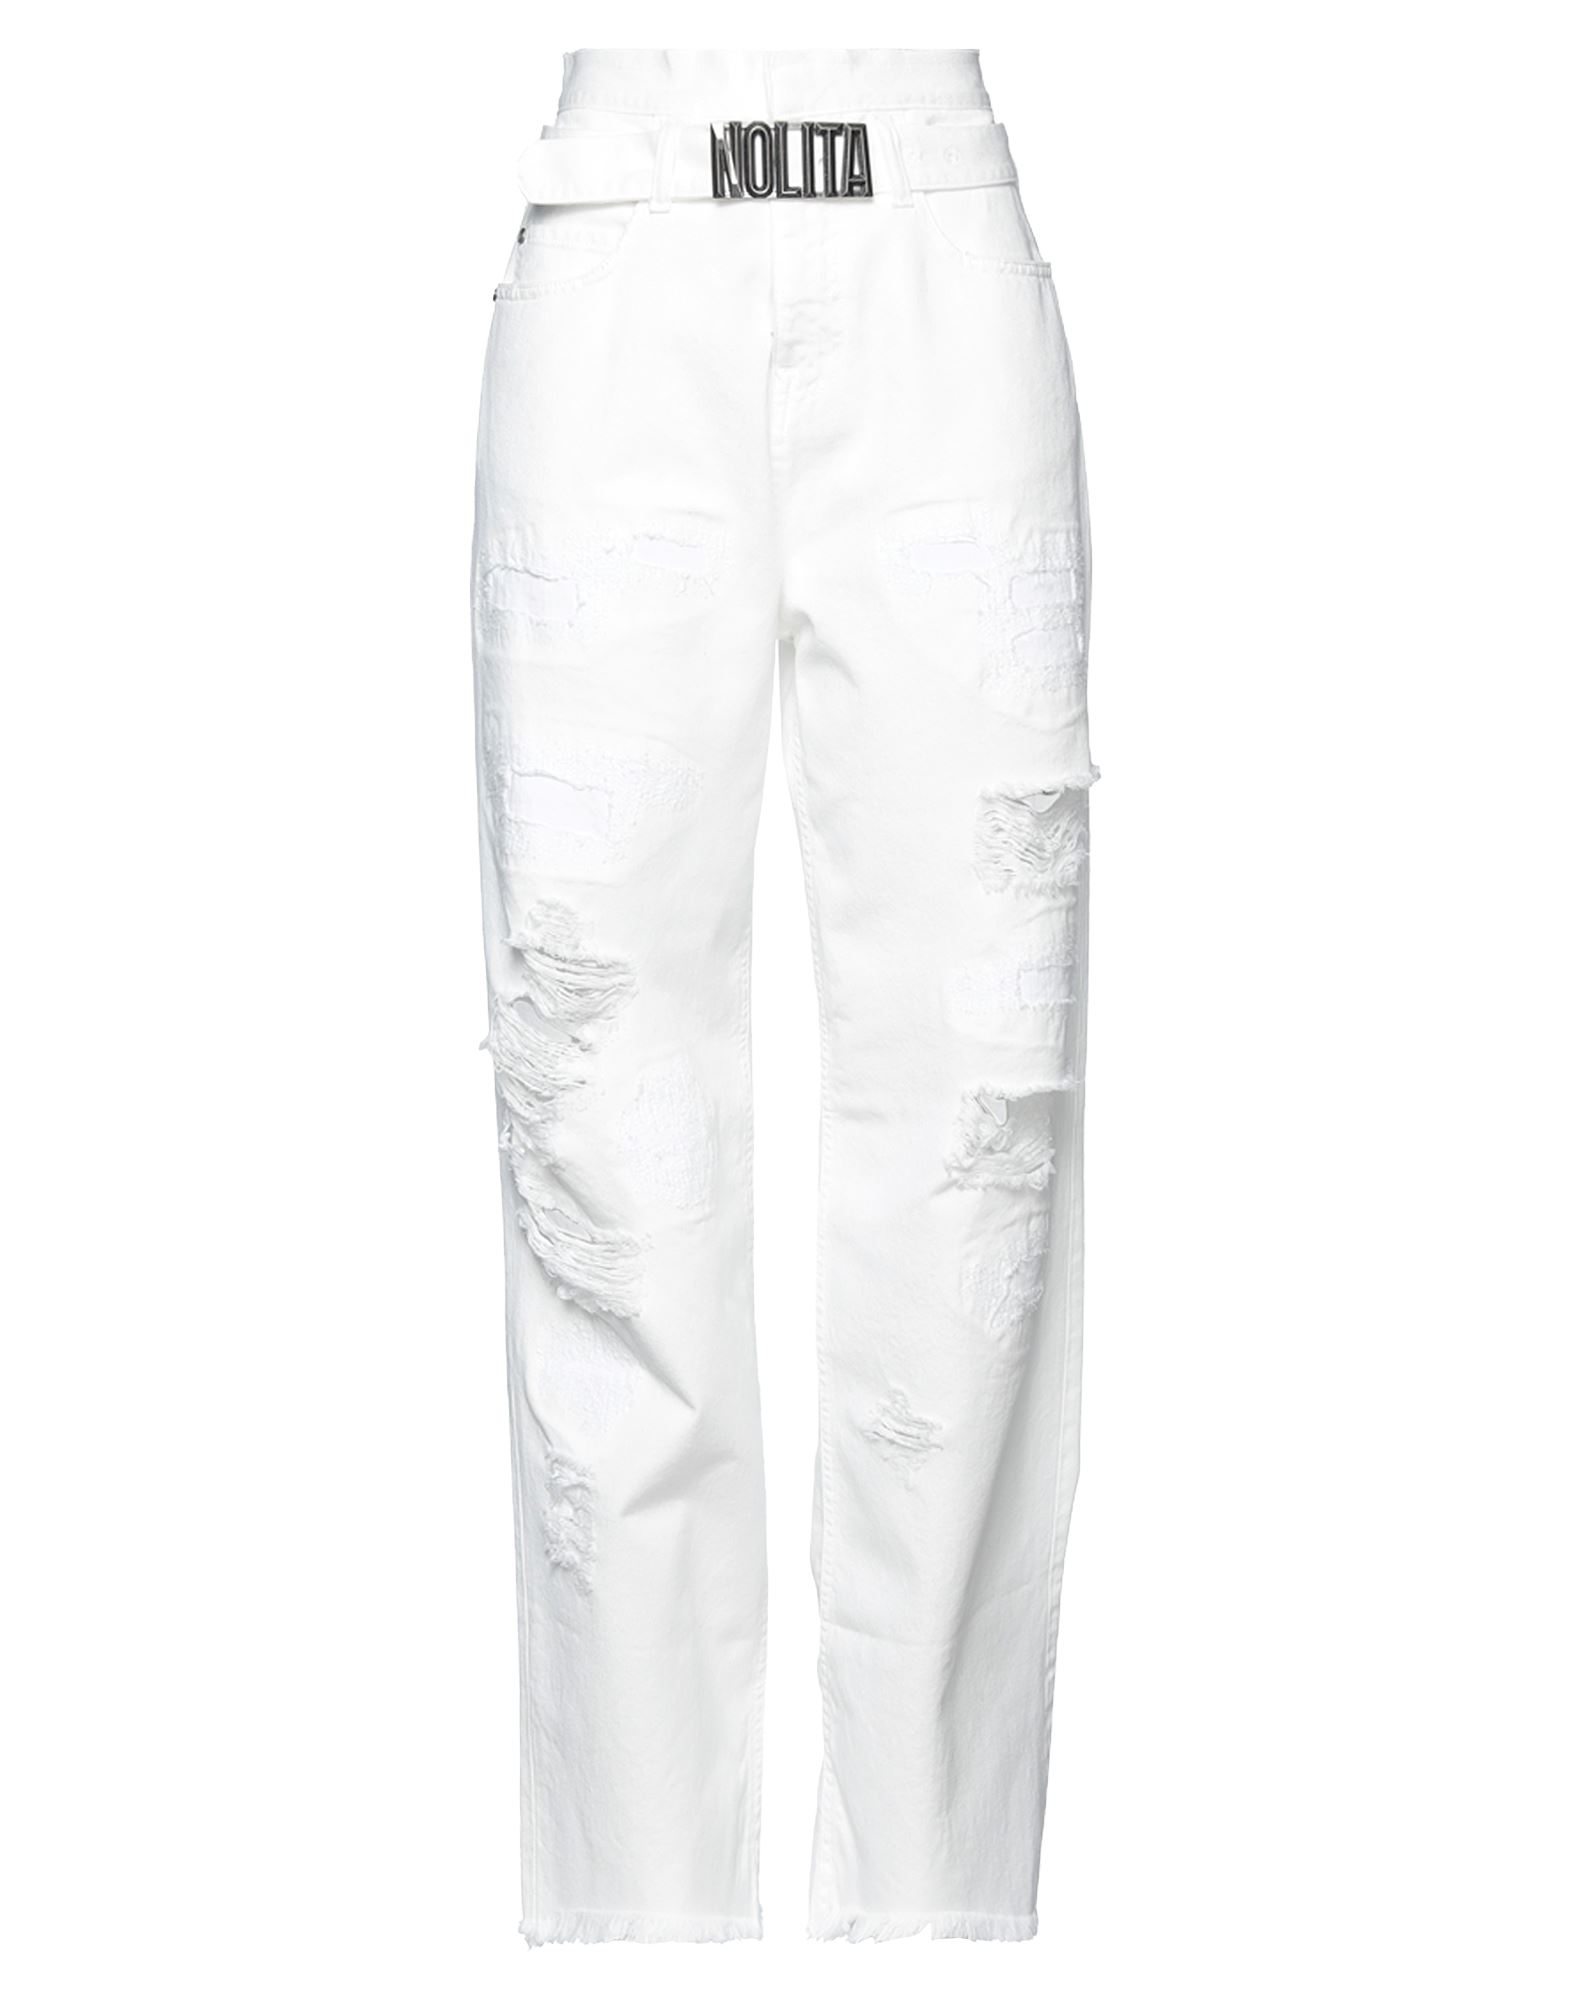 Nolita Pants In White